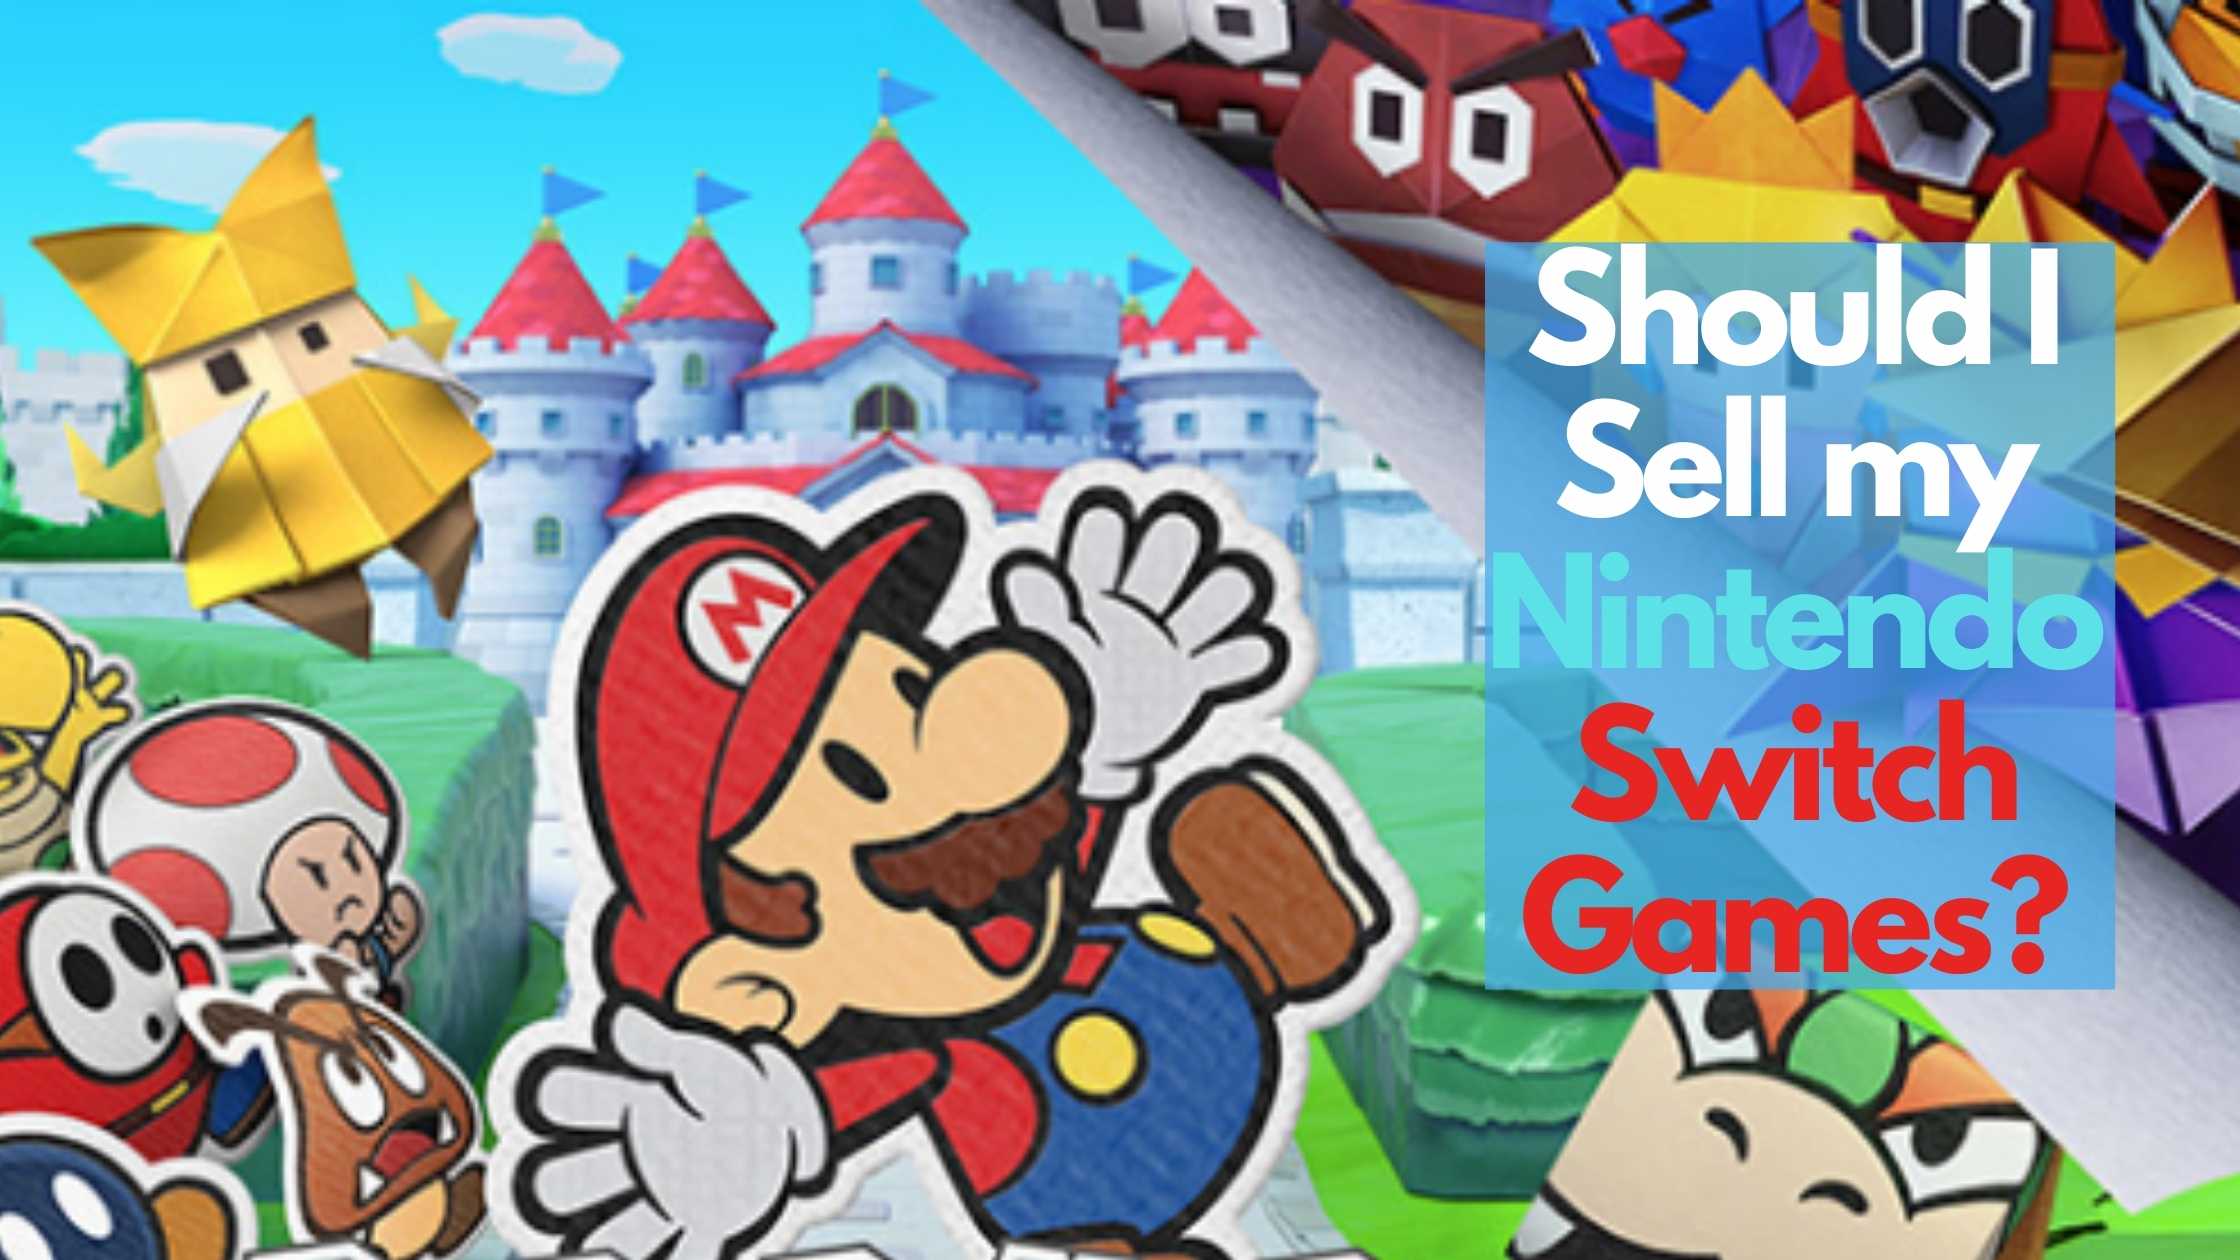 Should I sell my Nintendo Switch Games? | Sheepbuy Blog